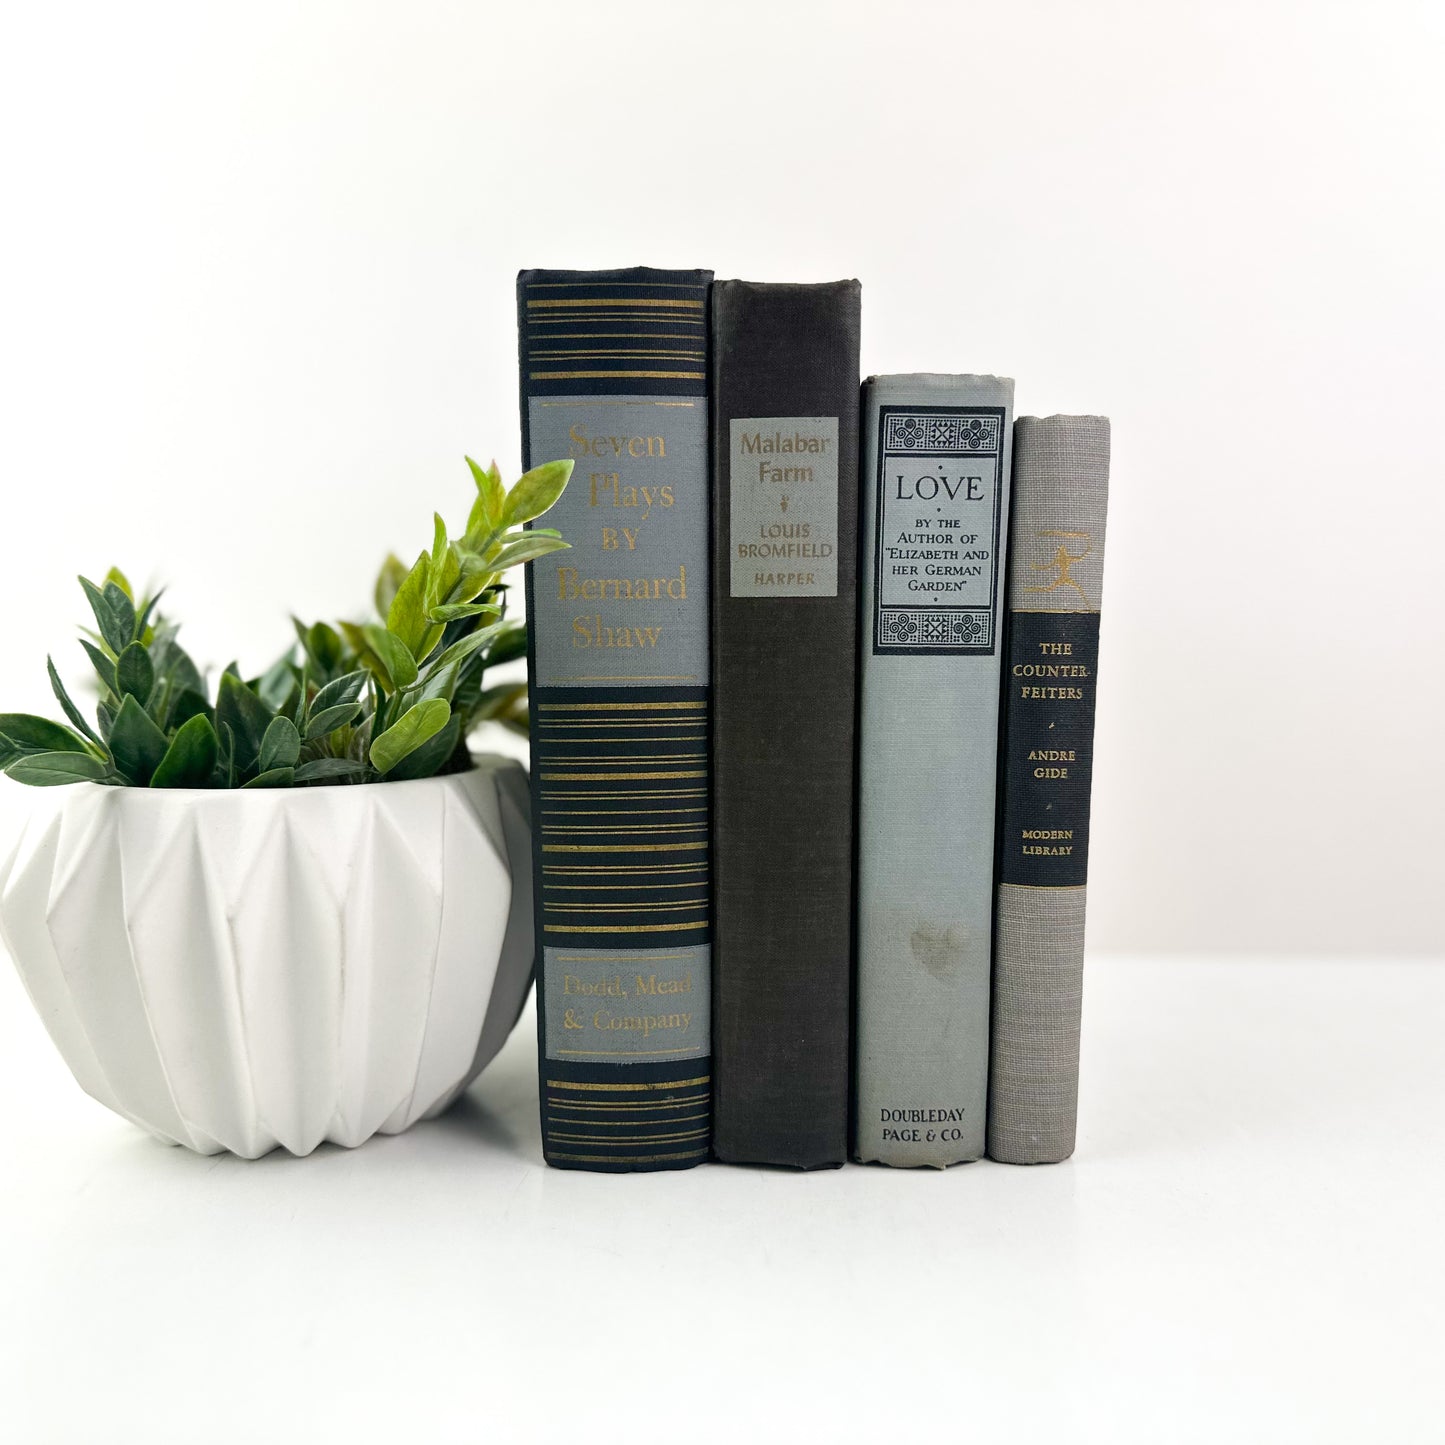 Classic Shelf Design with Books